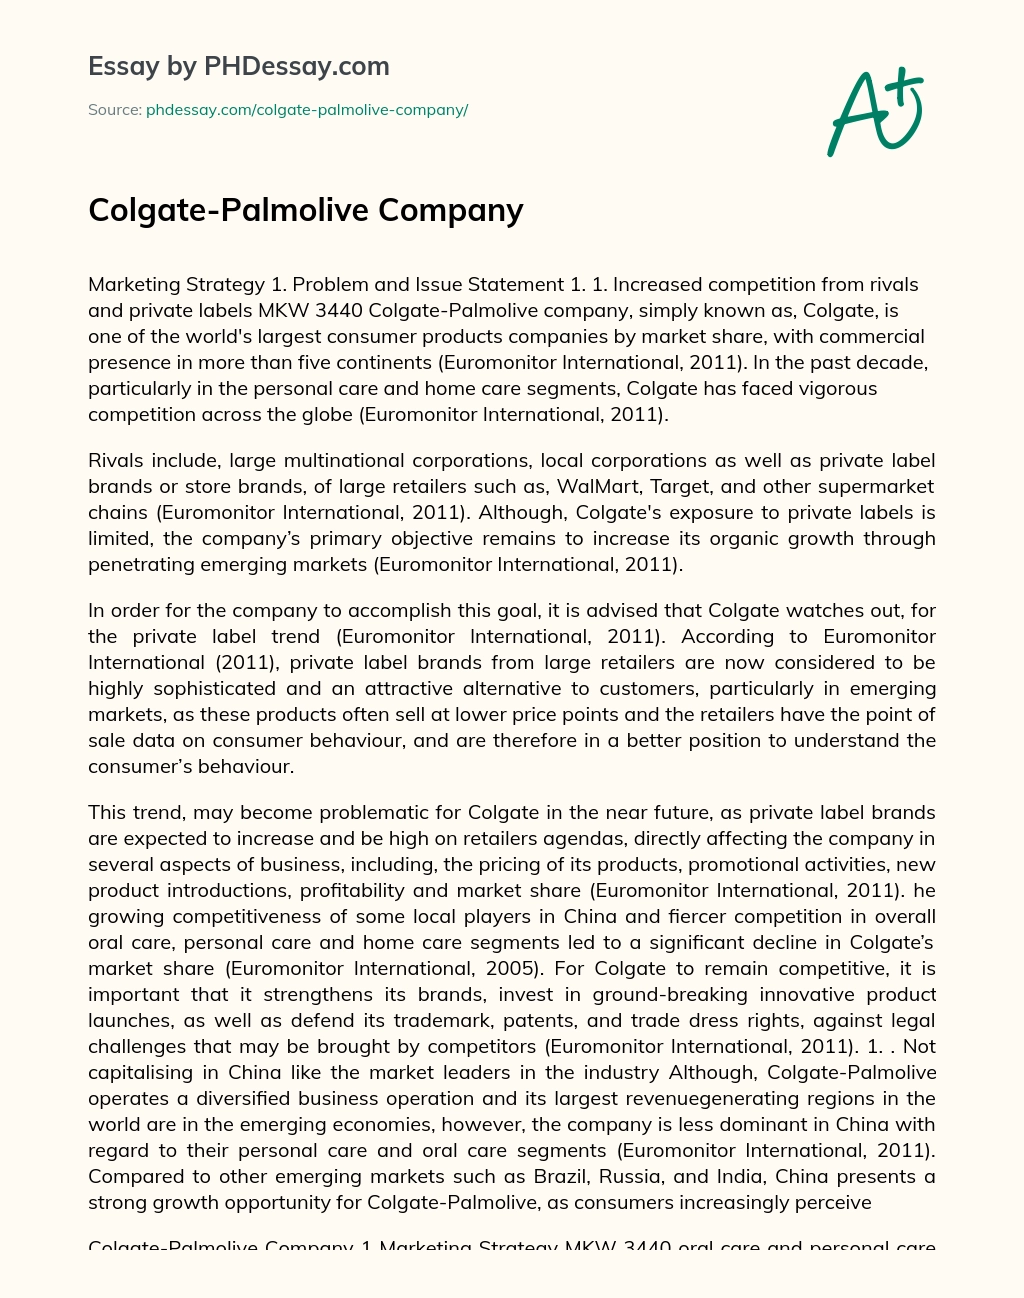 Colgate-Palmolive Company essay